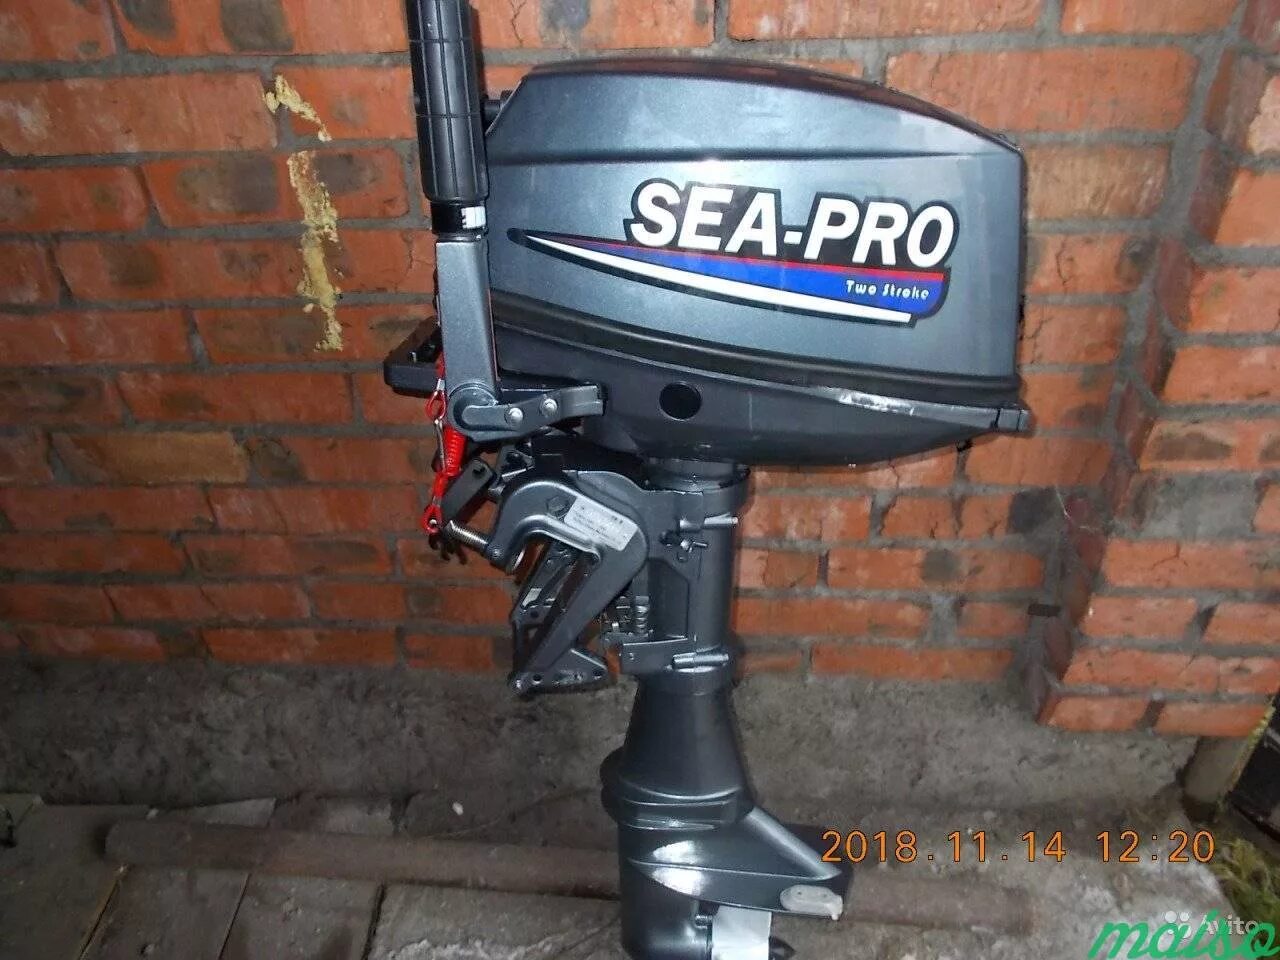 Sea Pro t 9.8s. Лодочный мотор Sea Pro t9.8. Лодочный мотор Sea-Pro t 9.8s. Лодочный мотор Sea Pro 9.8. Авито лодочные моторы 9.8